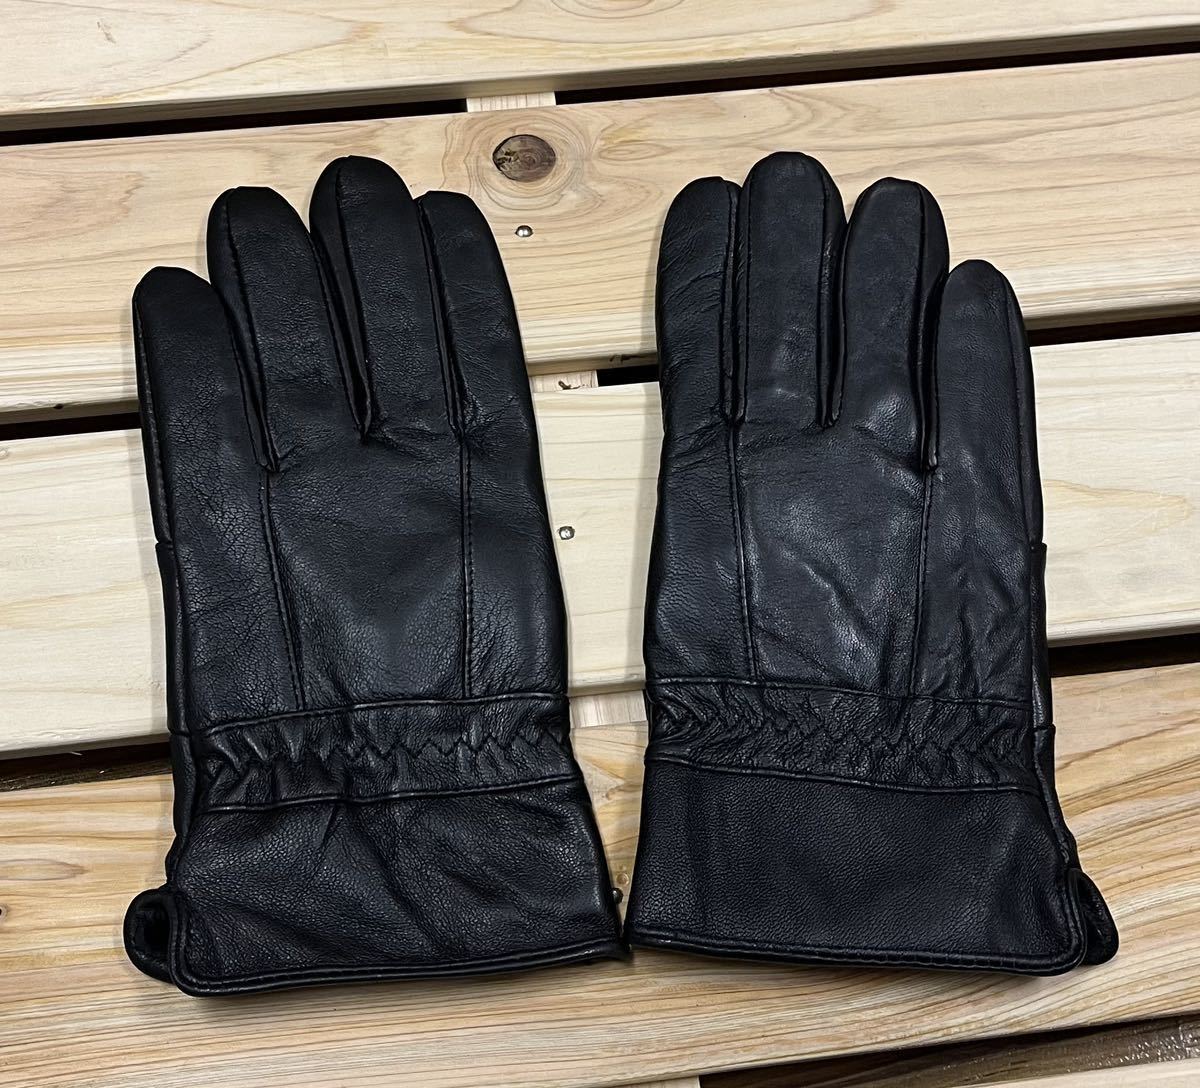  with translation * outlet * new goods * men's leather gloves ram leather reverse side nappy warm standard black original leather M size .. black 